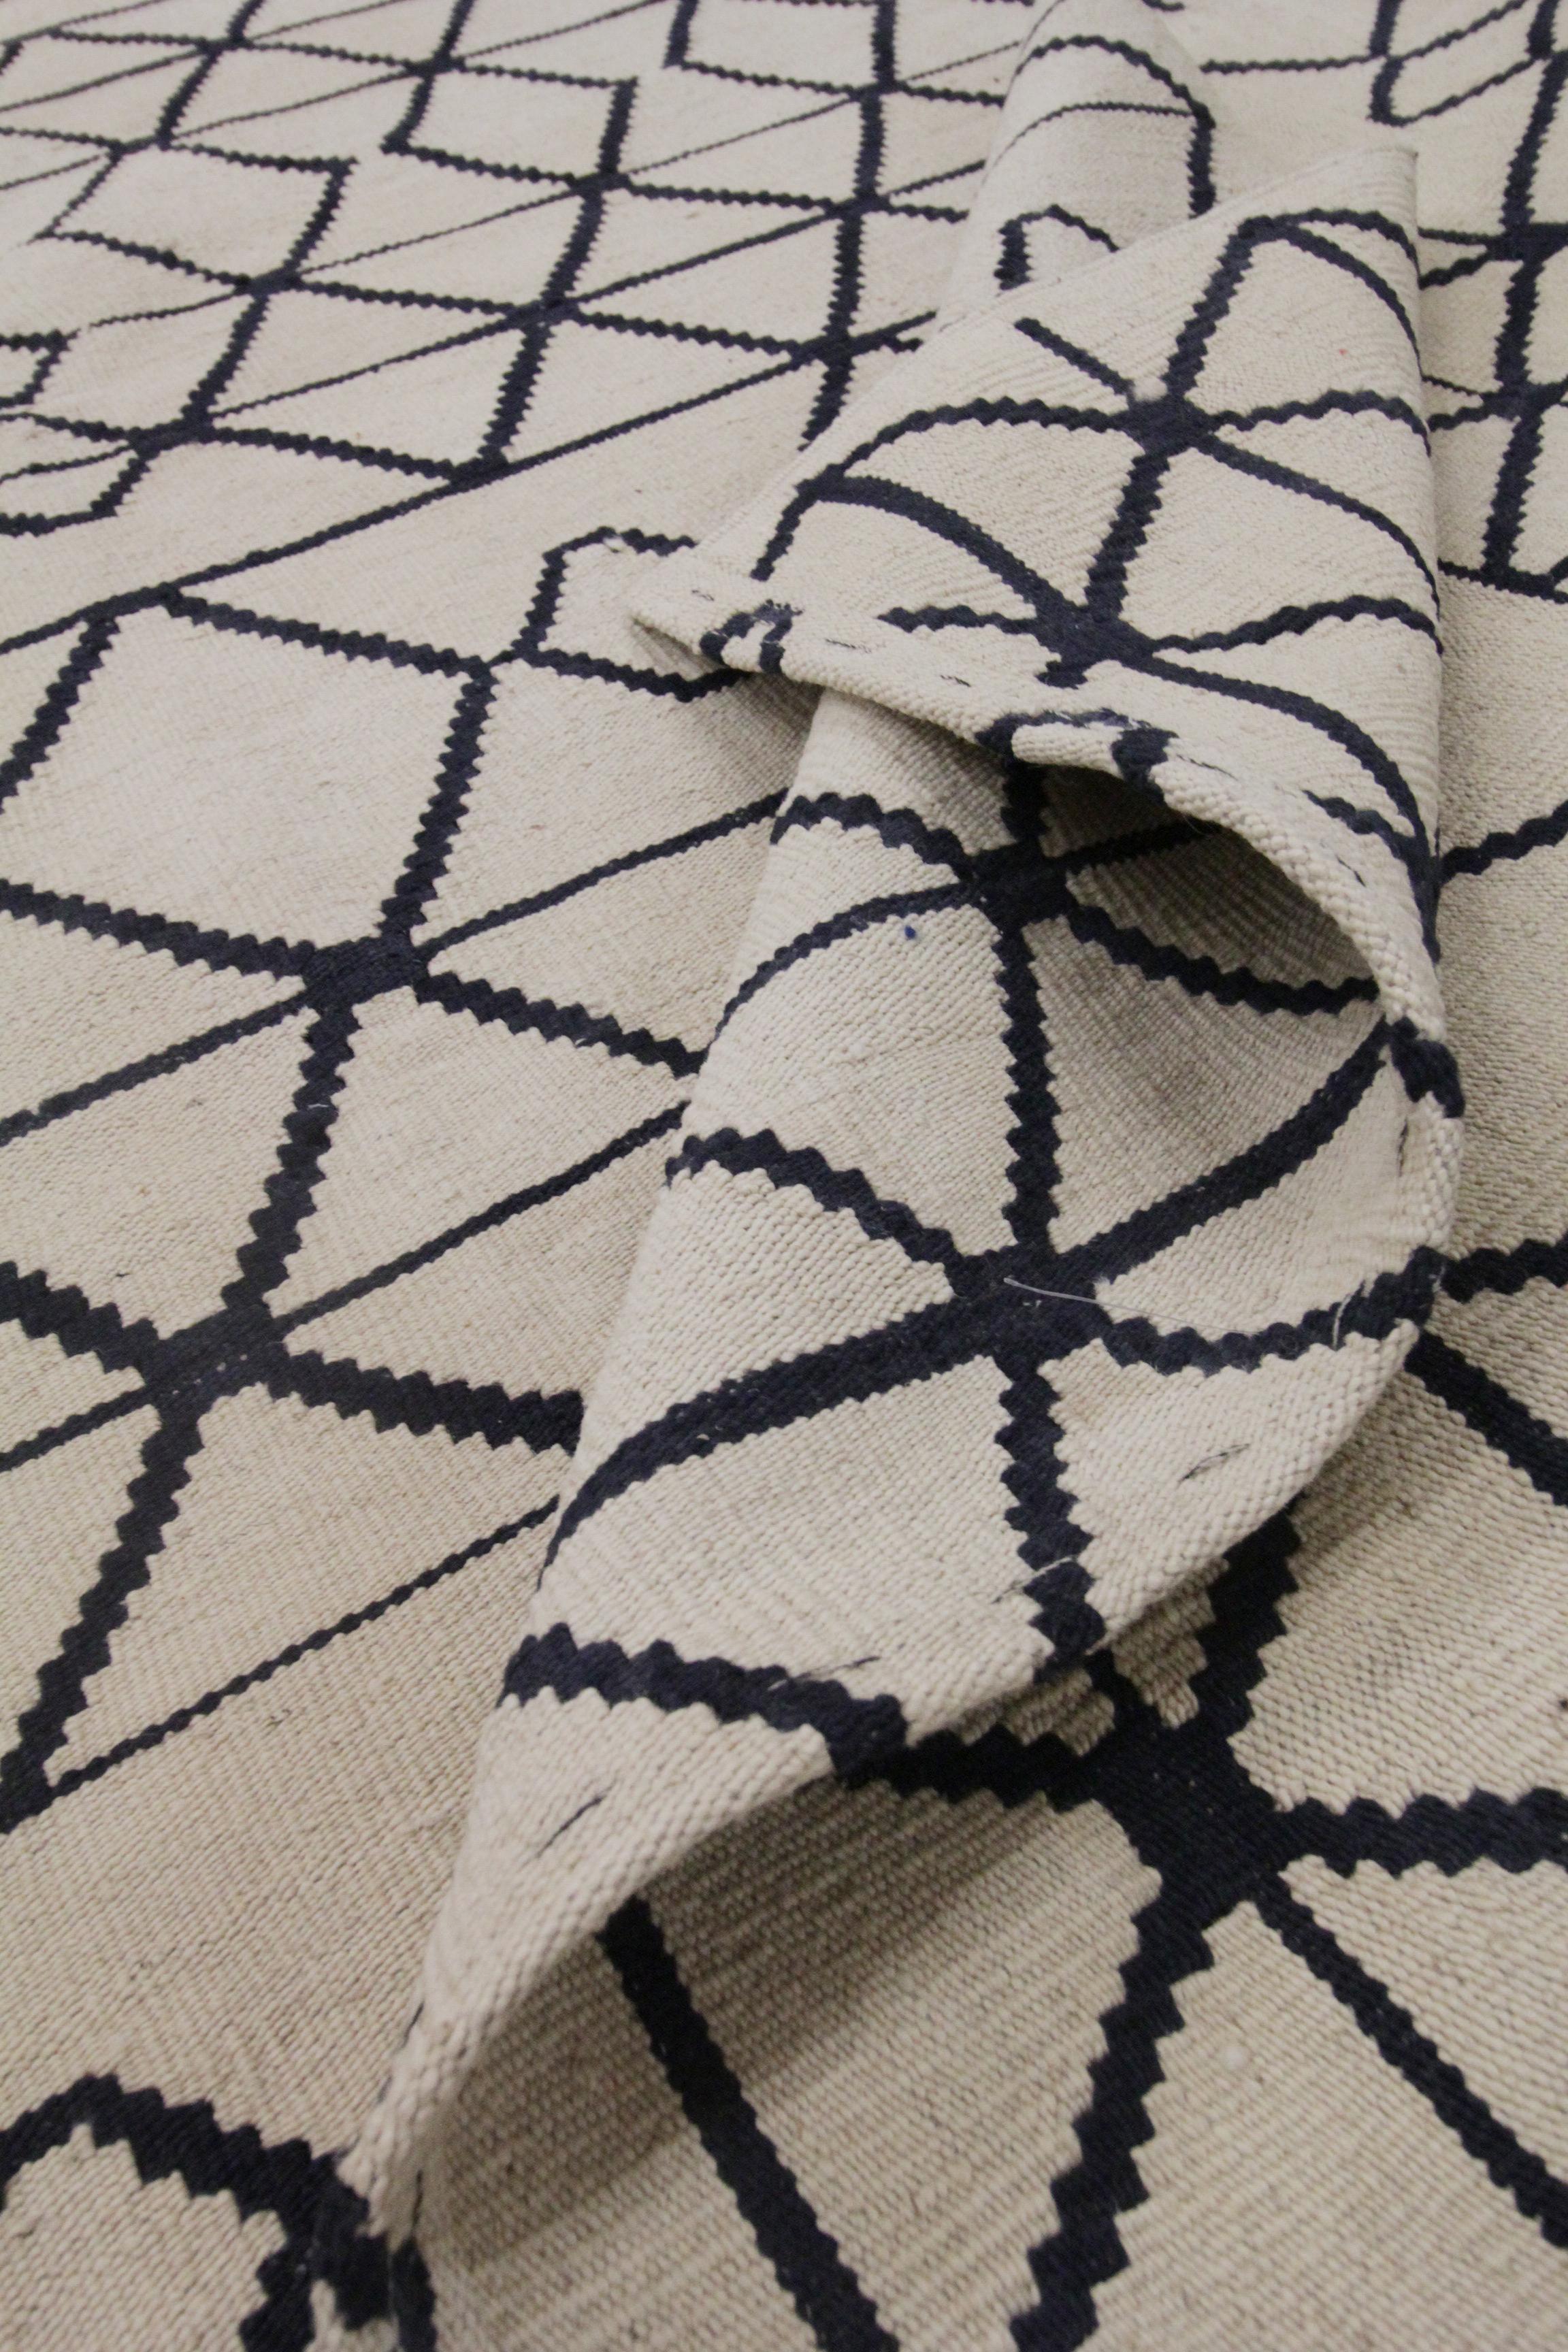 Afghan Modern Kilim Rug Cream Black Geometric Kilim Abstract Wool Area Rugs